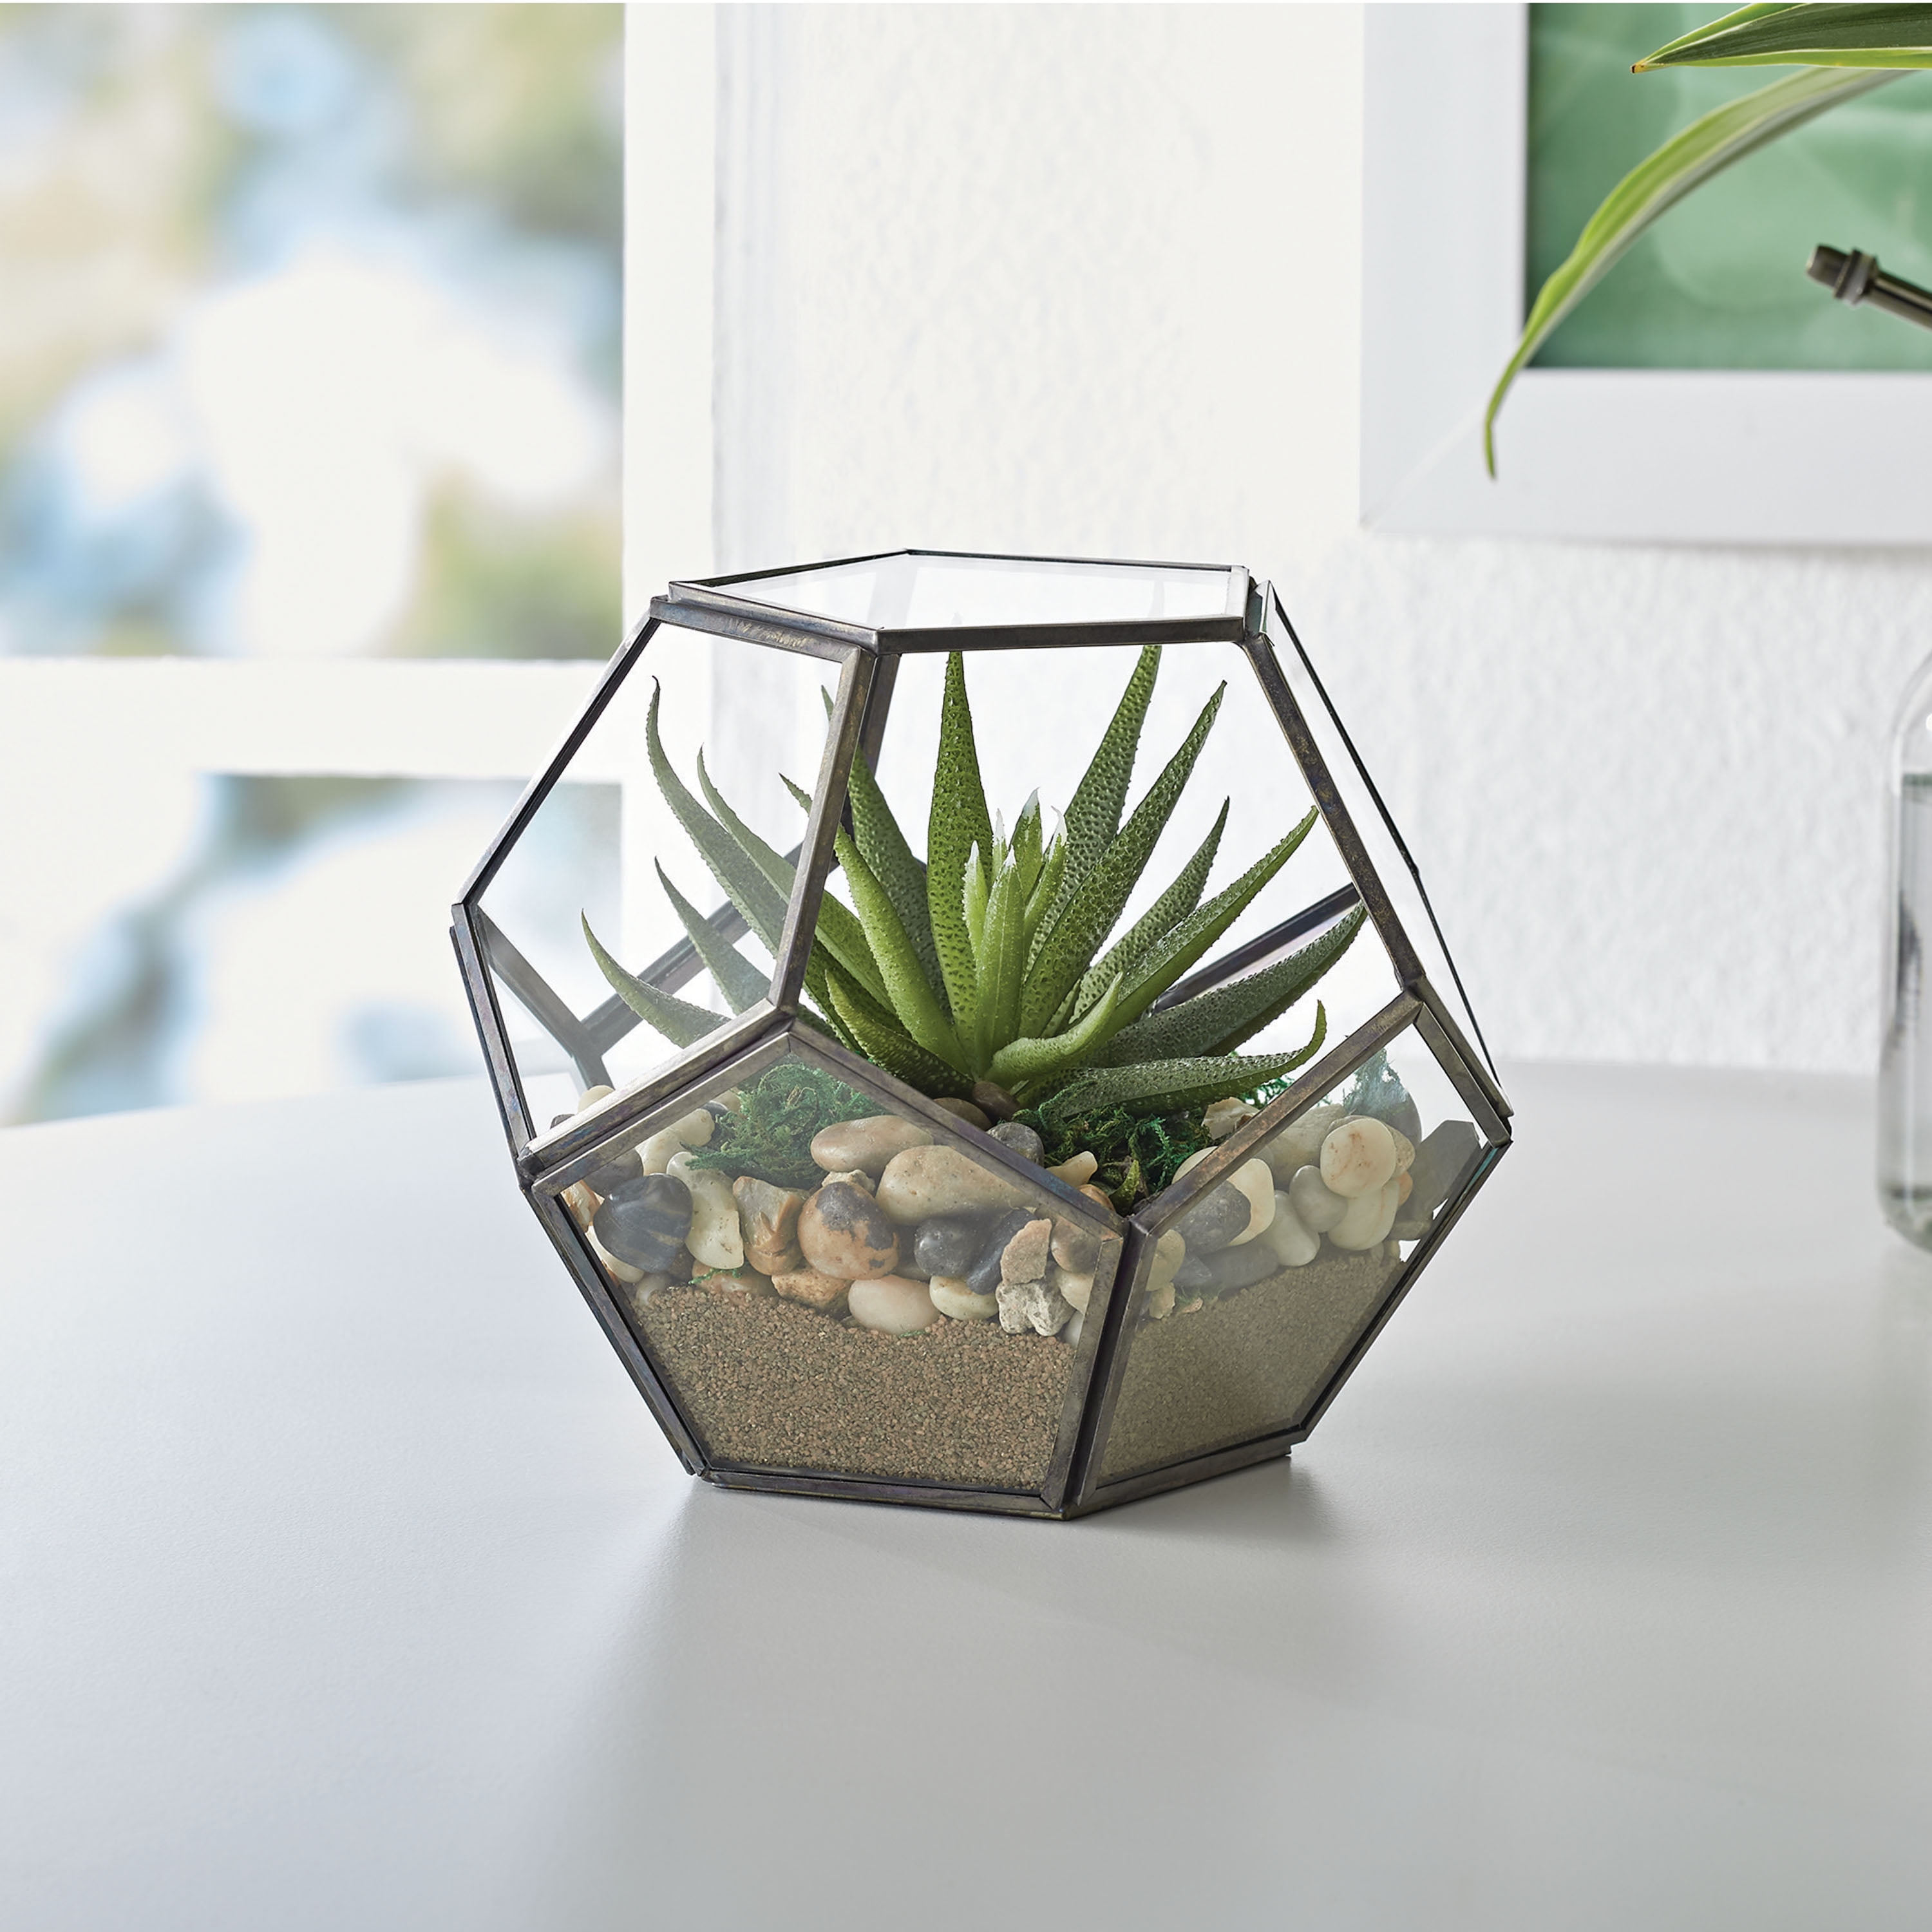 8x Skull Shaped Glass Flower Vase Plants Terrarium Container Hydroponic Pot 